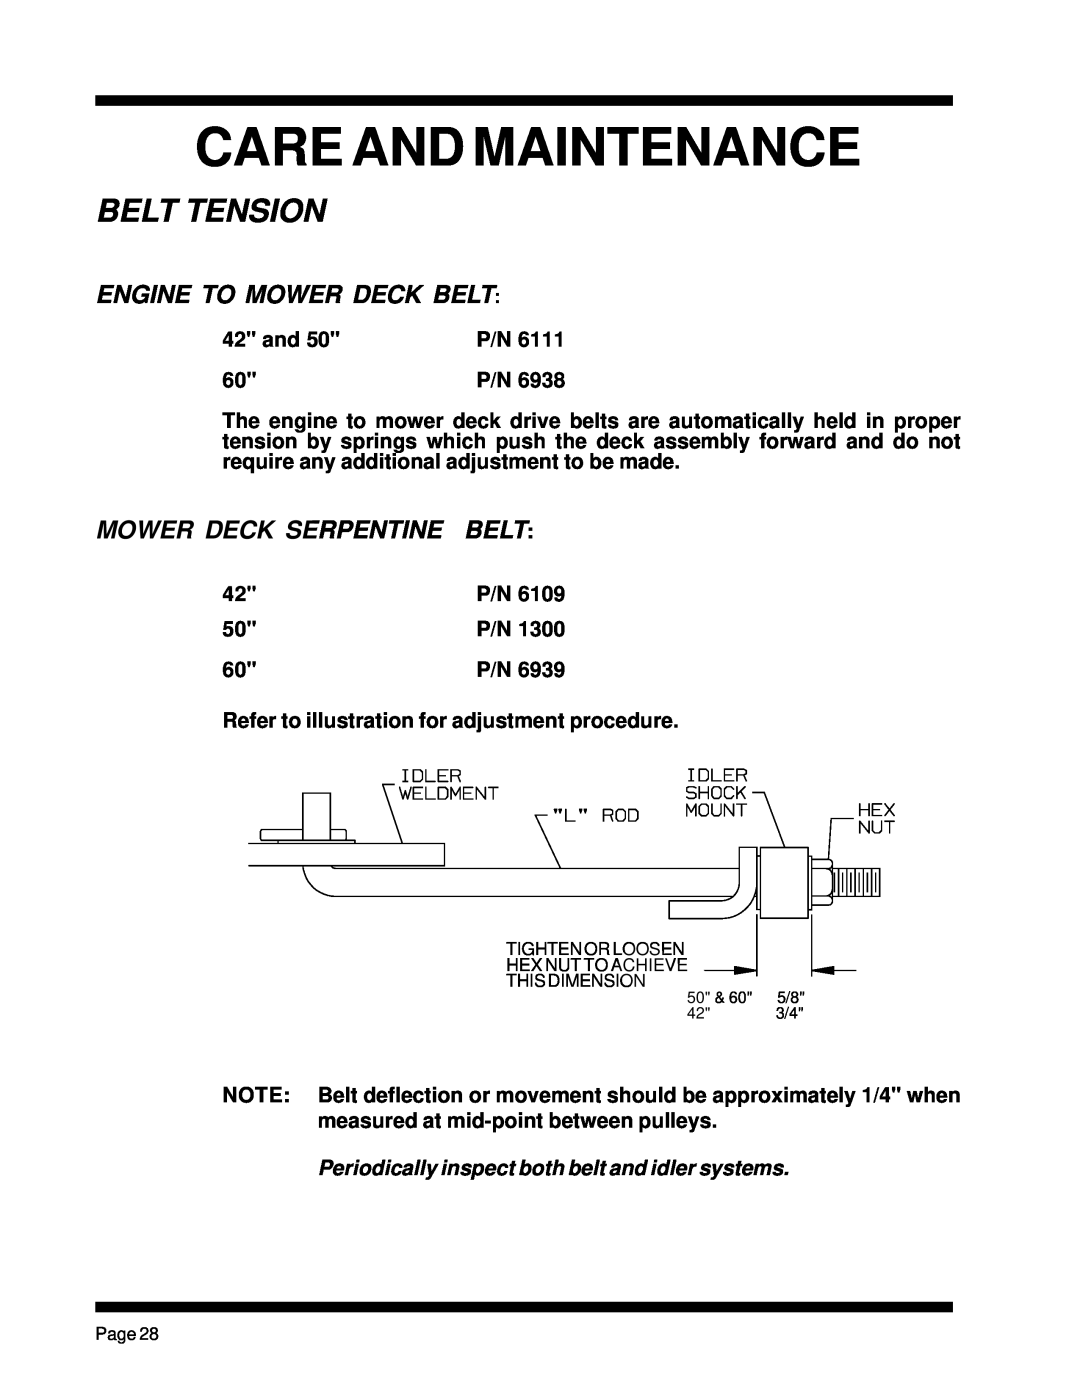 Dixon ZTR 5023, ZTR 5425 manual Belt Tension, Care And Maintenance, Engine To Mower Deck Belt, Mower Deck Serpentine 